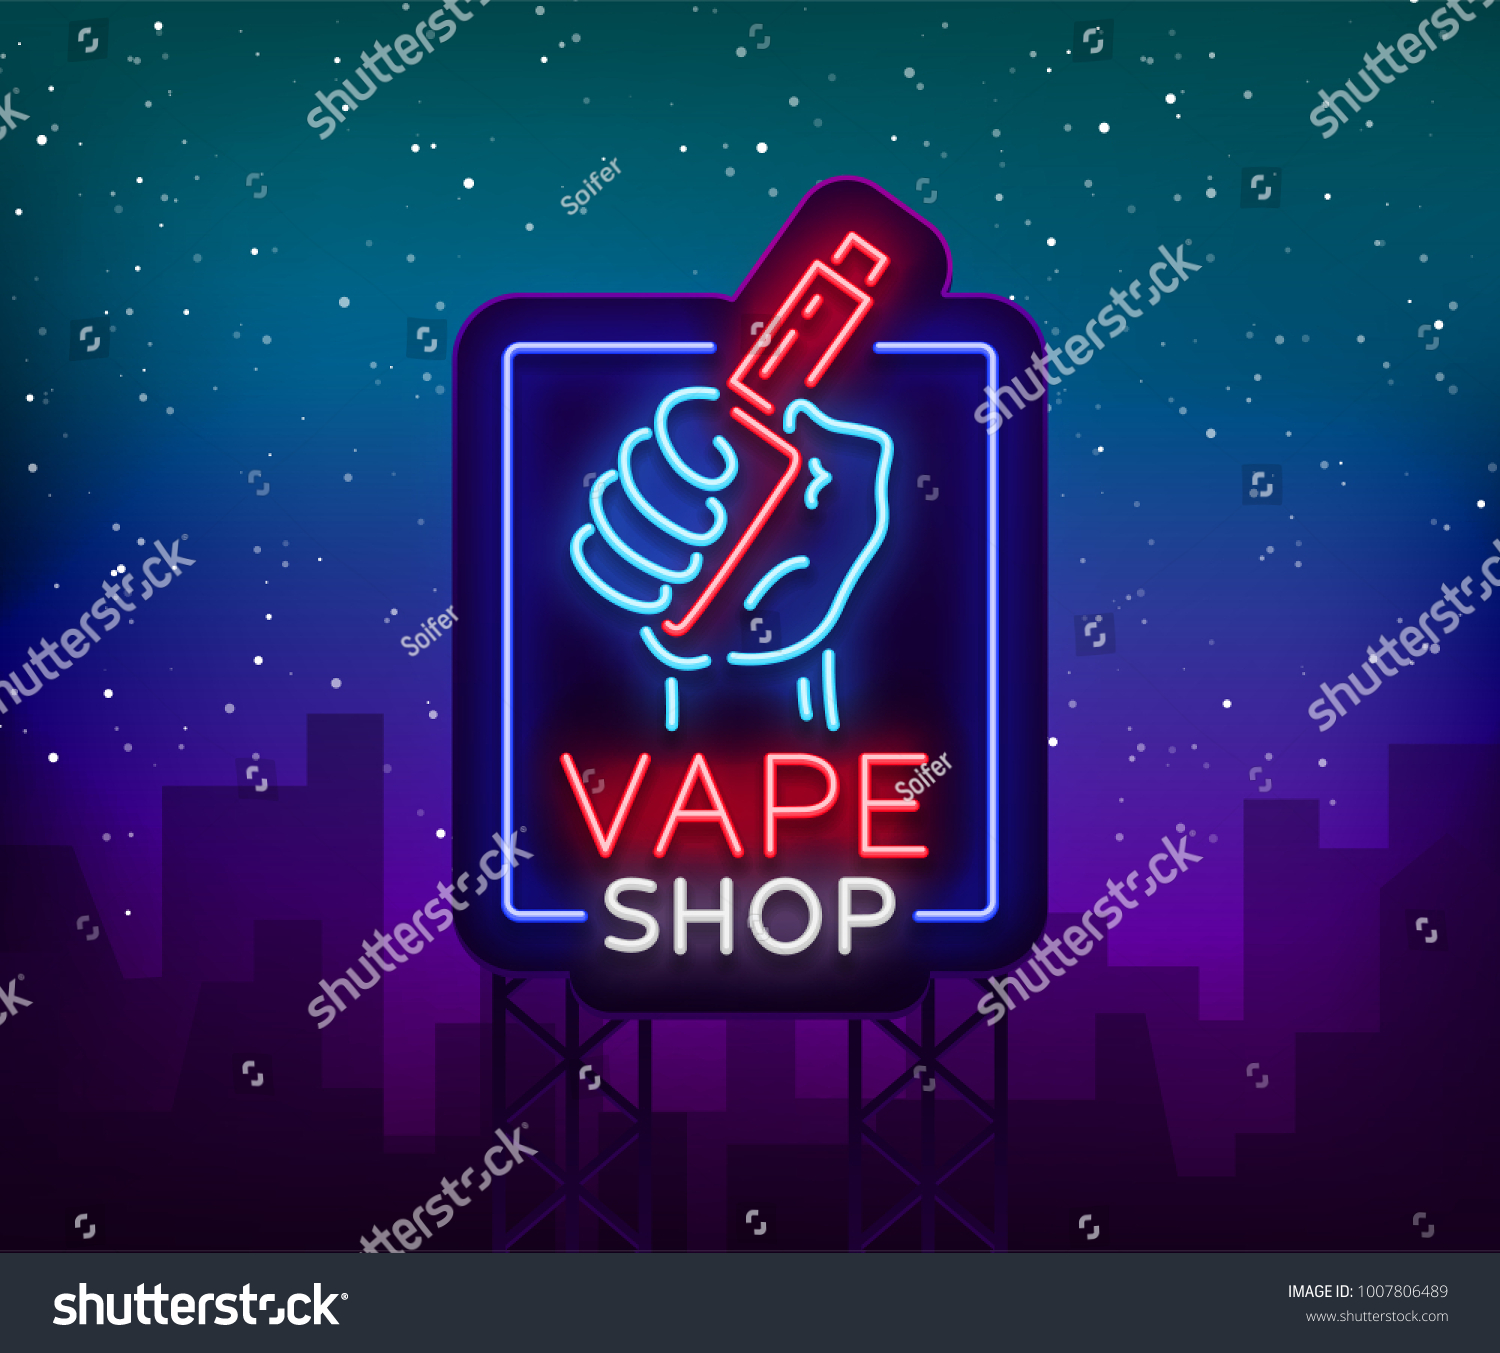 Vape Shop Neon Sign Billboard Vector Stock Vector (Royalty Free) 1007806489